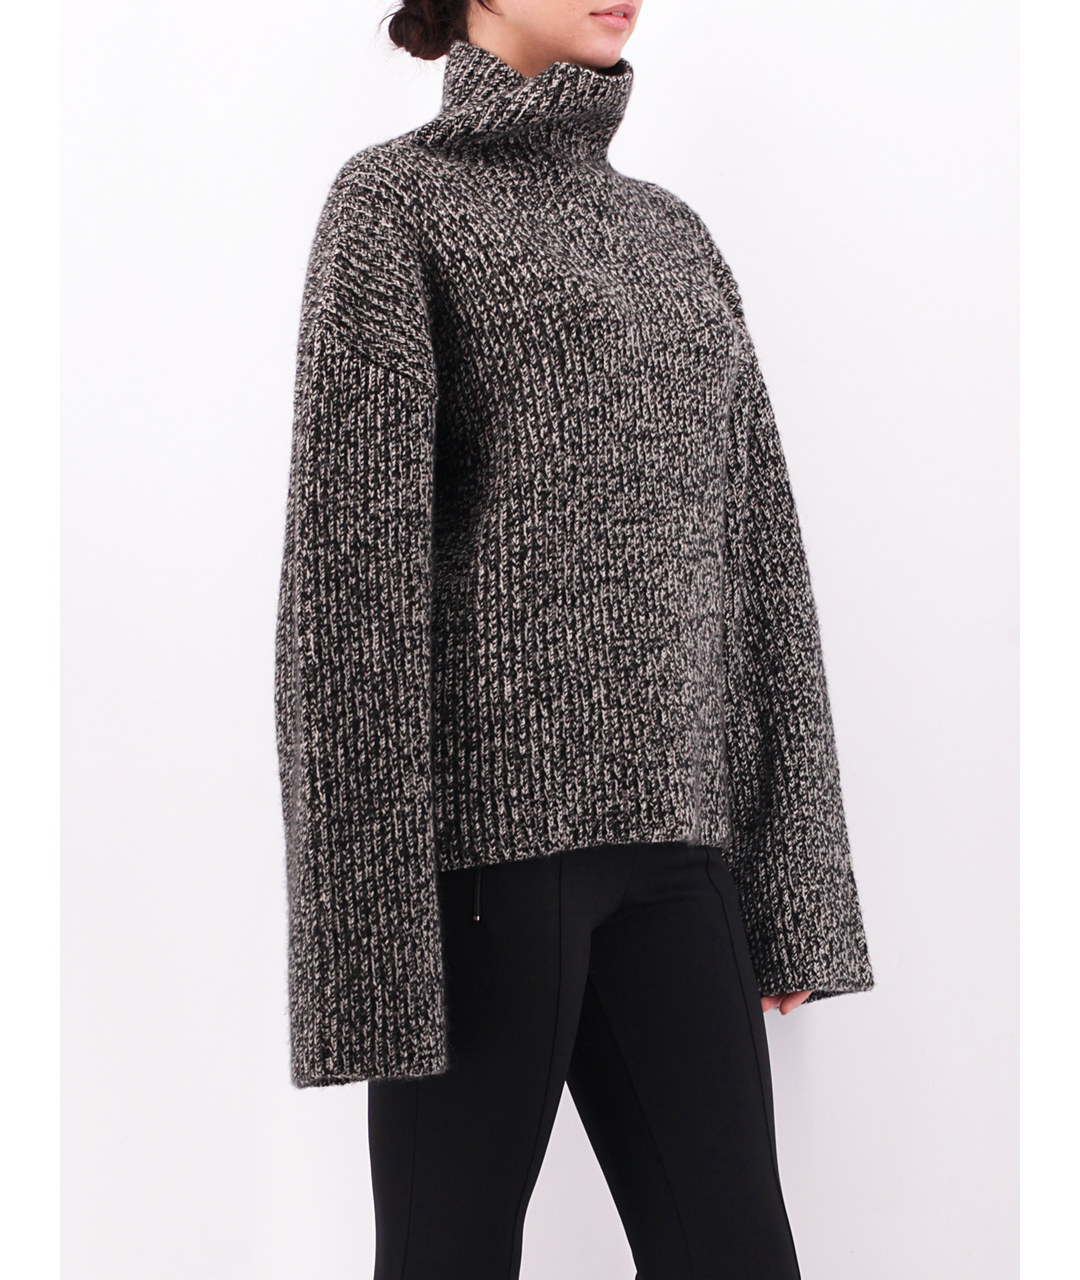 CELINE PRE-OWNED Серый кашемировый джемпер / свитер, фото 2